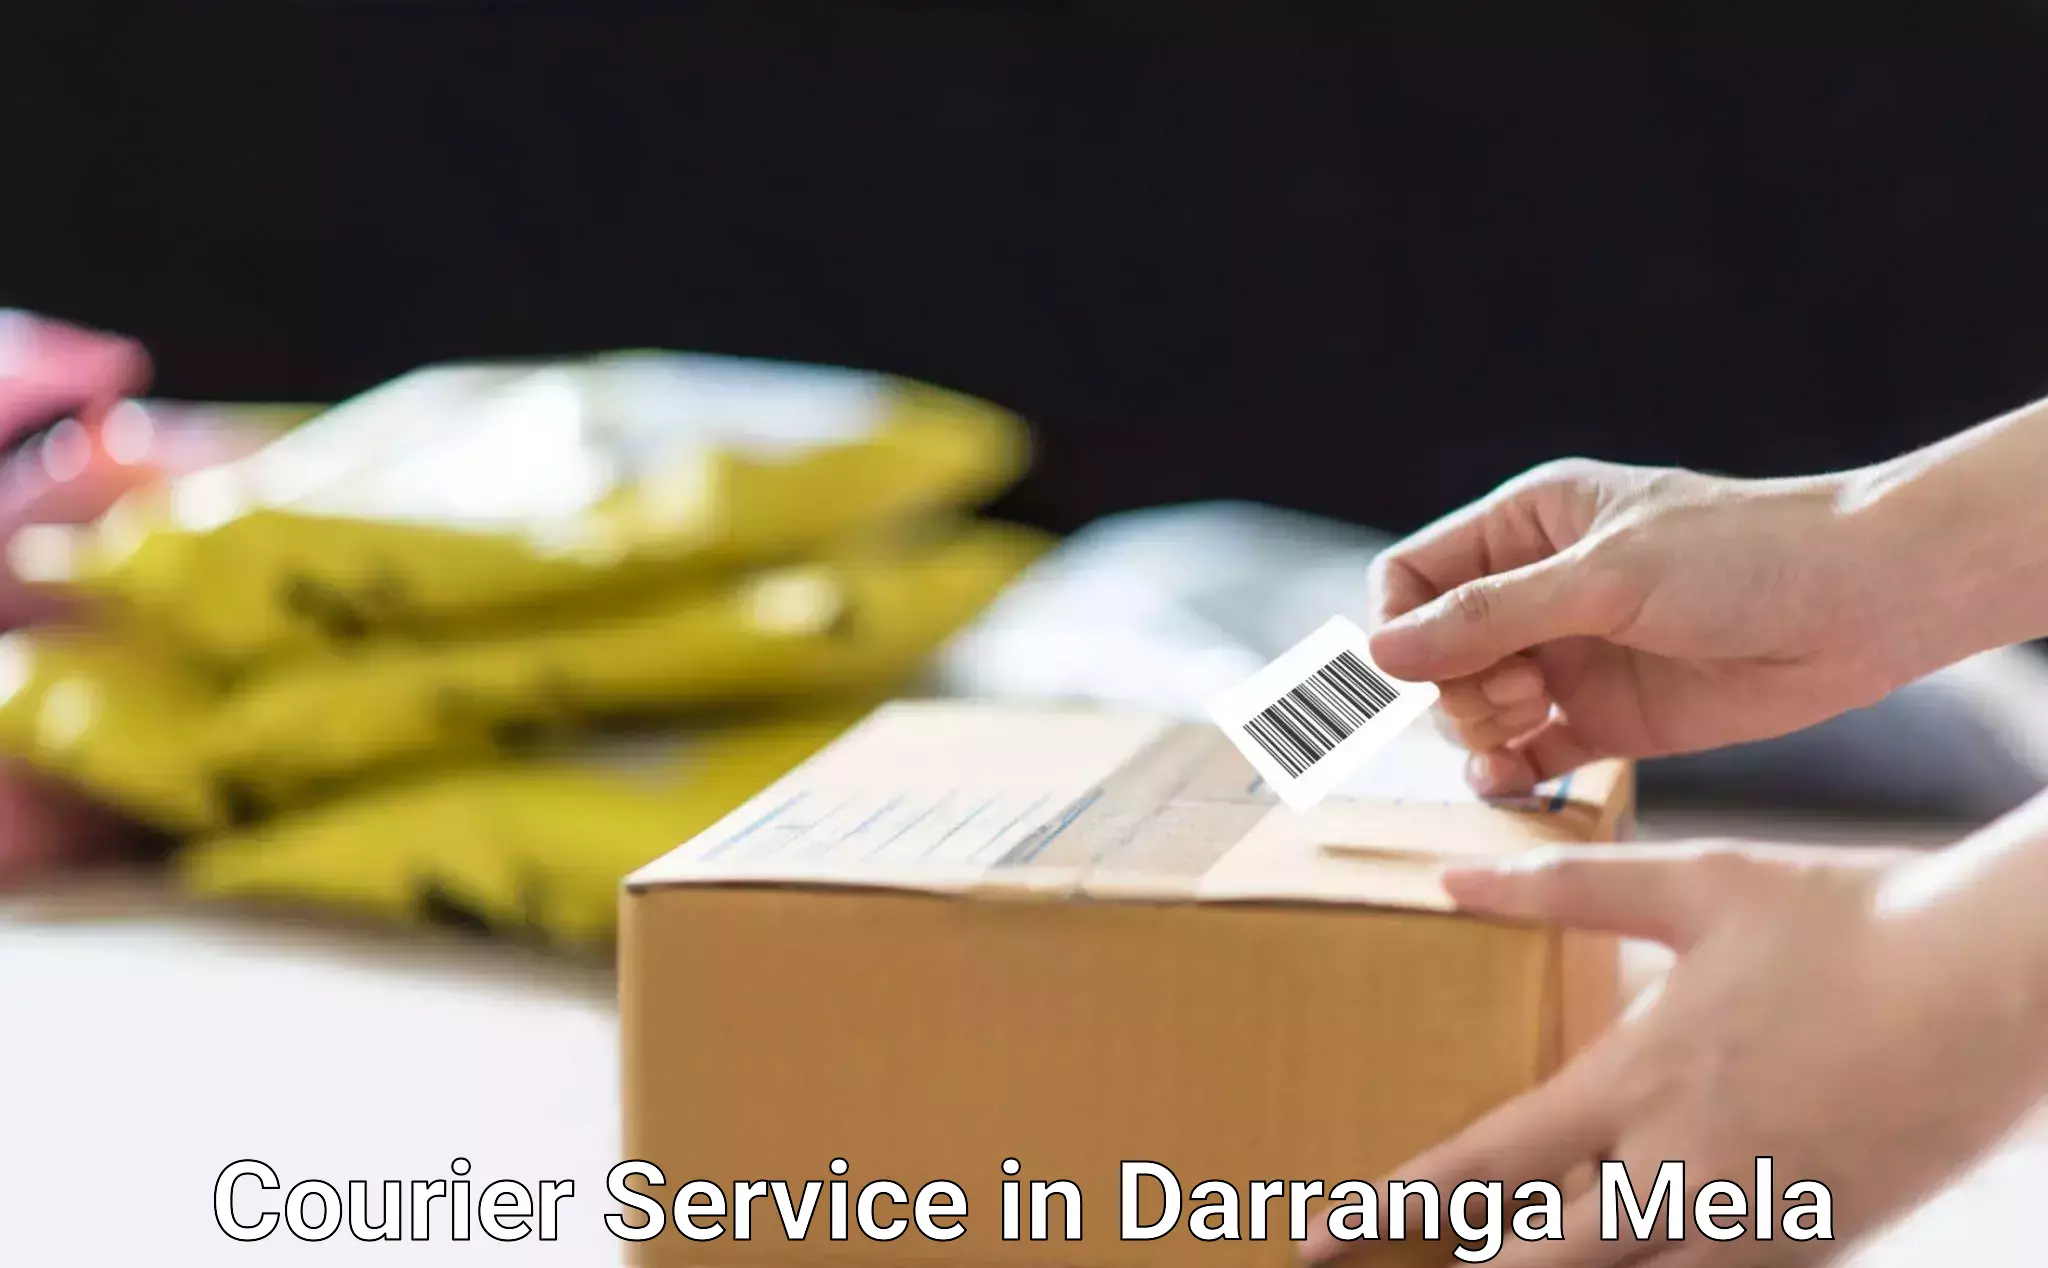 Speedy delivery service in Darranga Mela